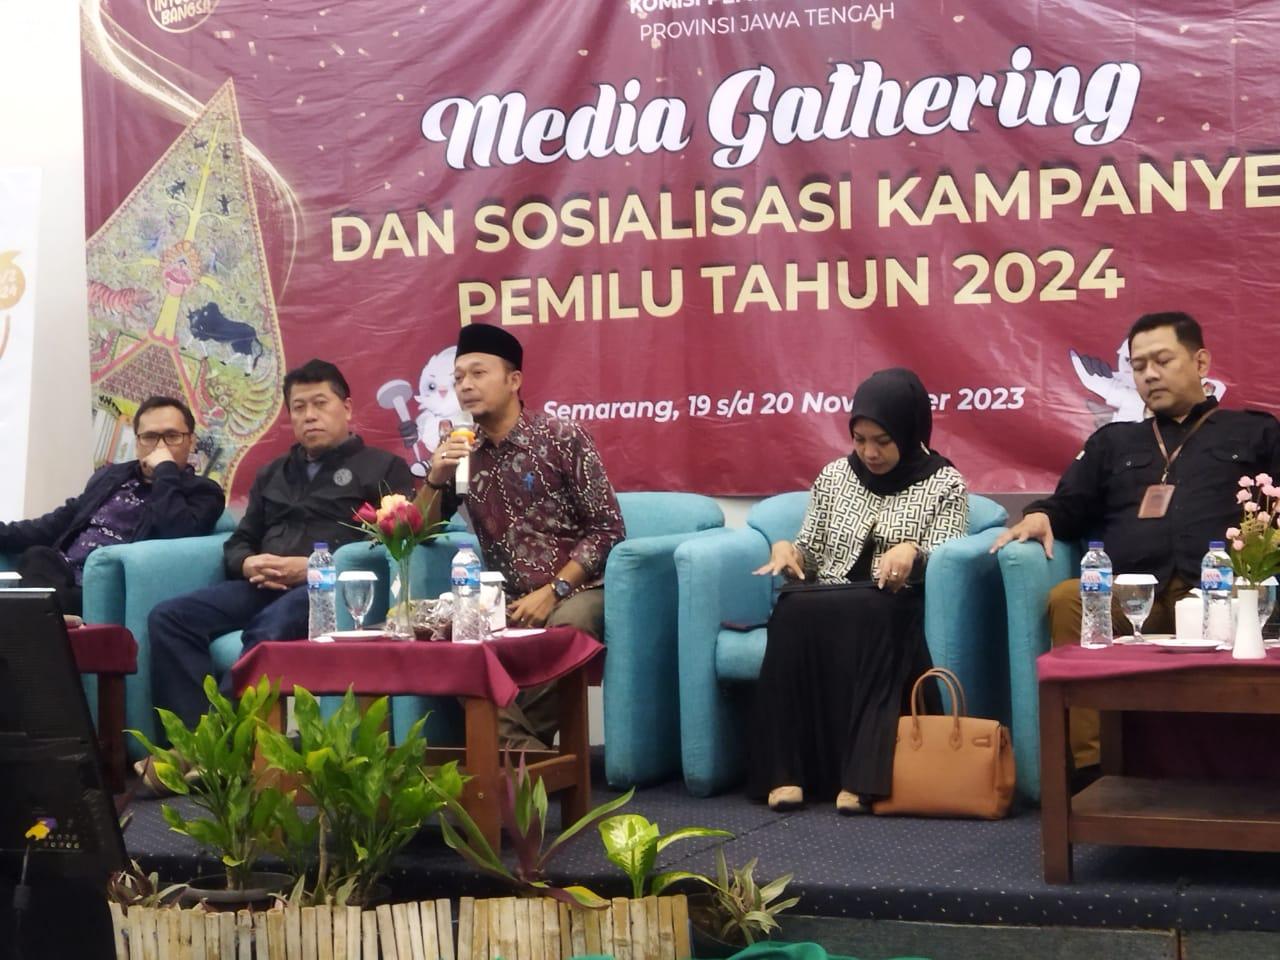 KPU Jateng menggelar kegiatan media gathering dan sosialisasi kampanye pemilu tahun 2024